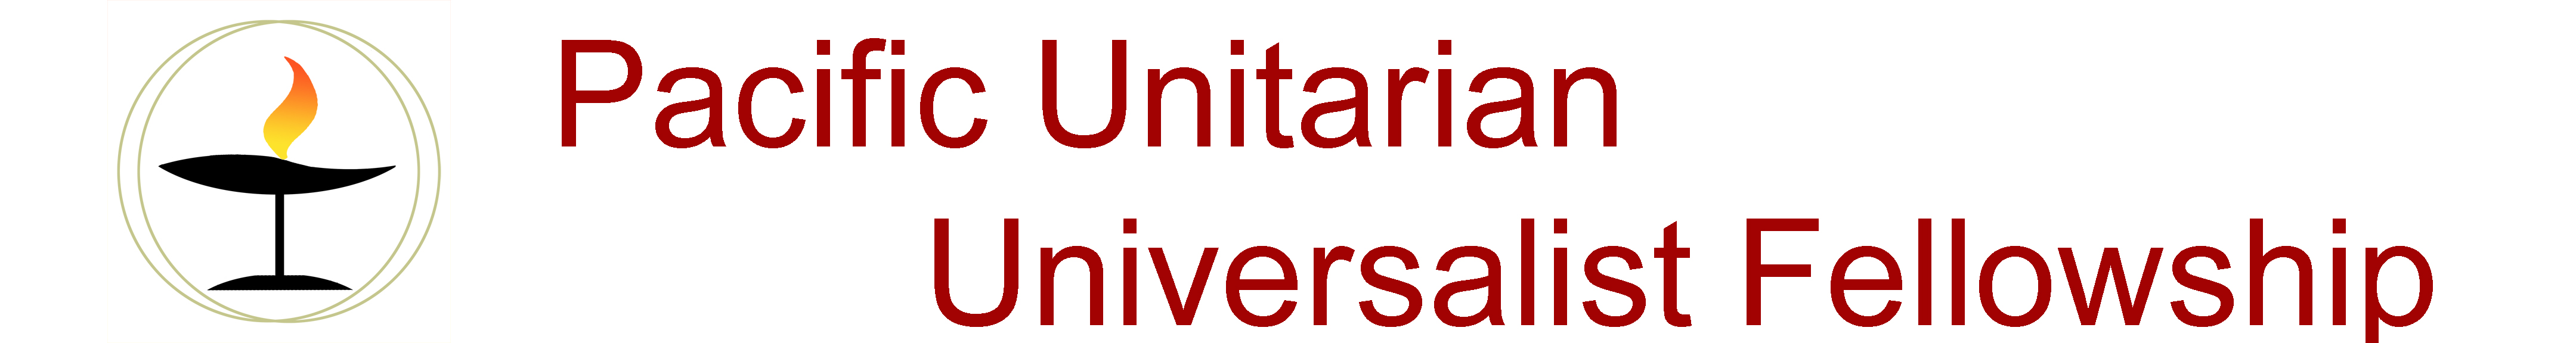 Pacific Unitarian Universalist Fellowship